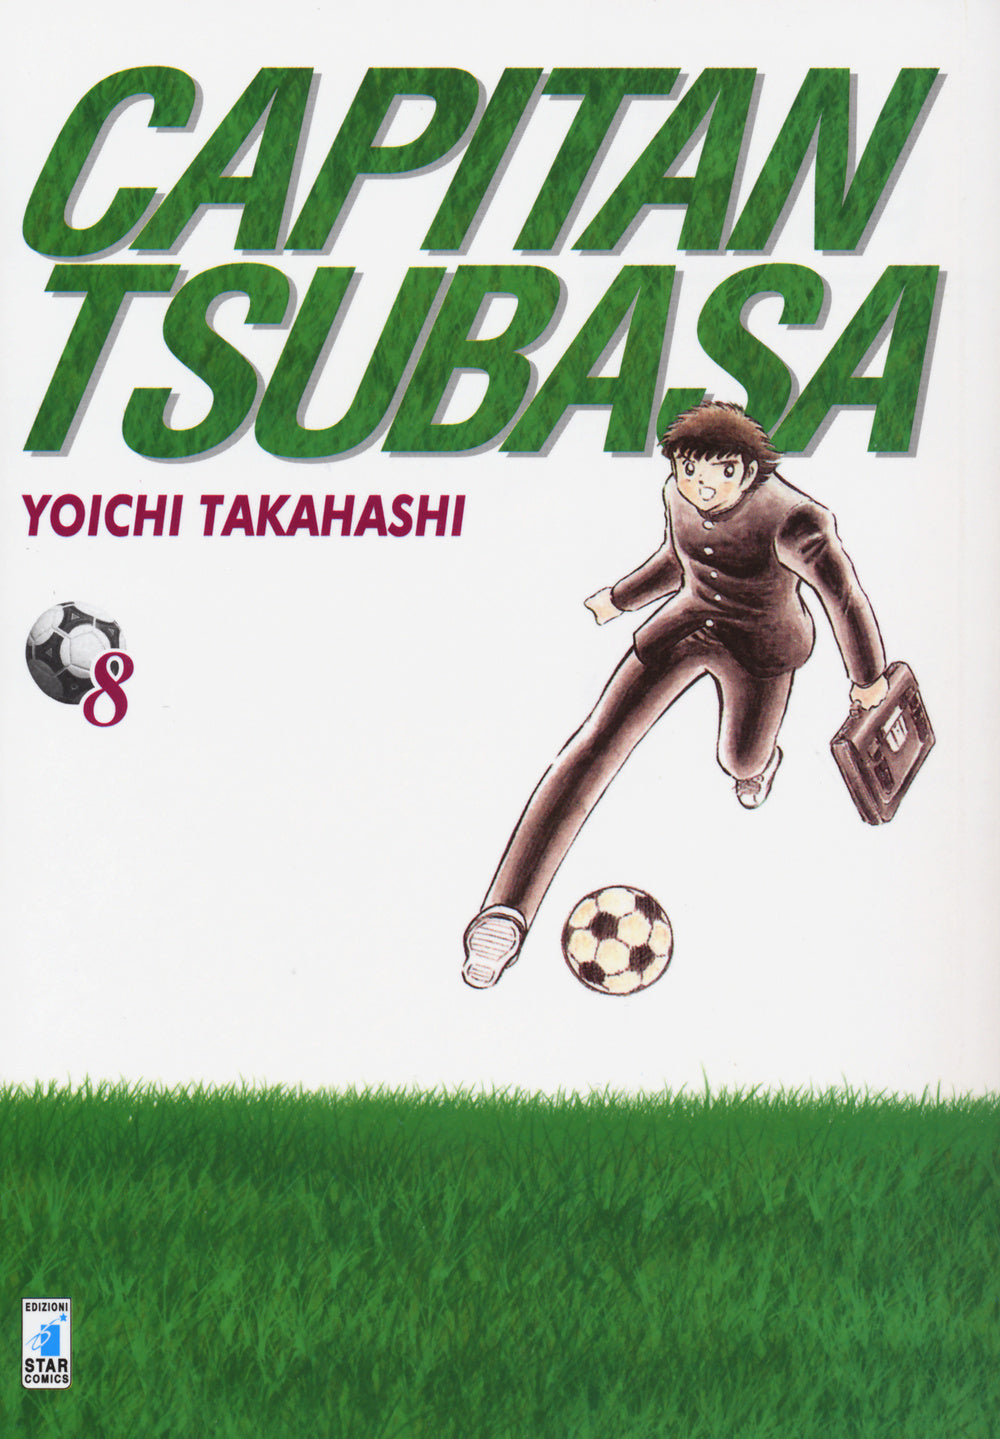 Capitan Tsubasa. New edition. Vol. 21.